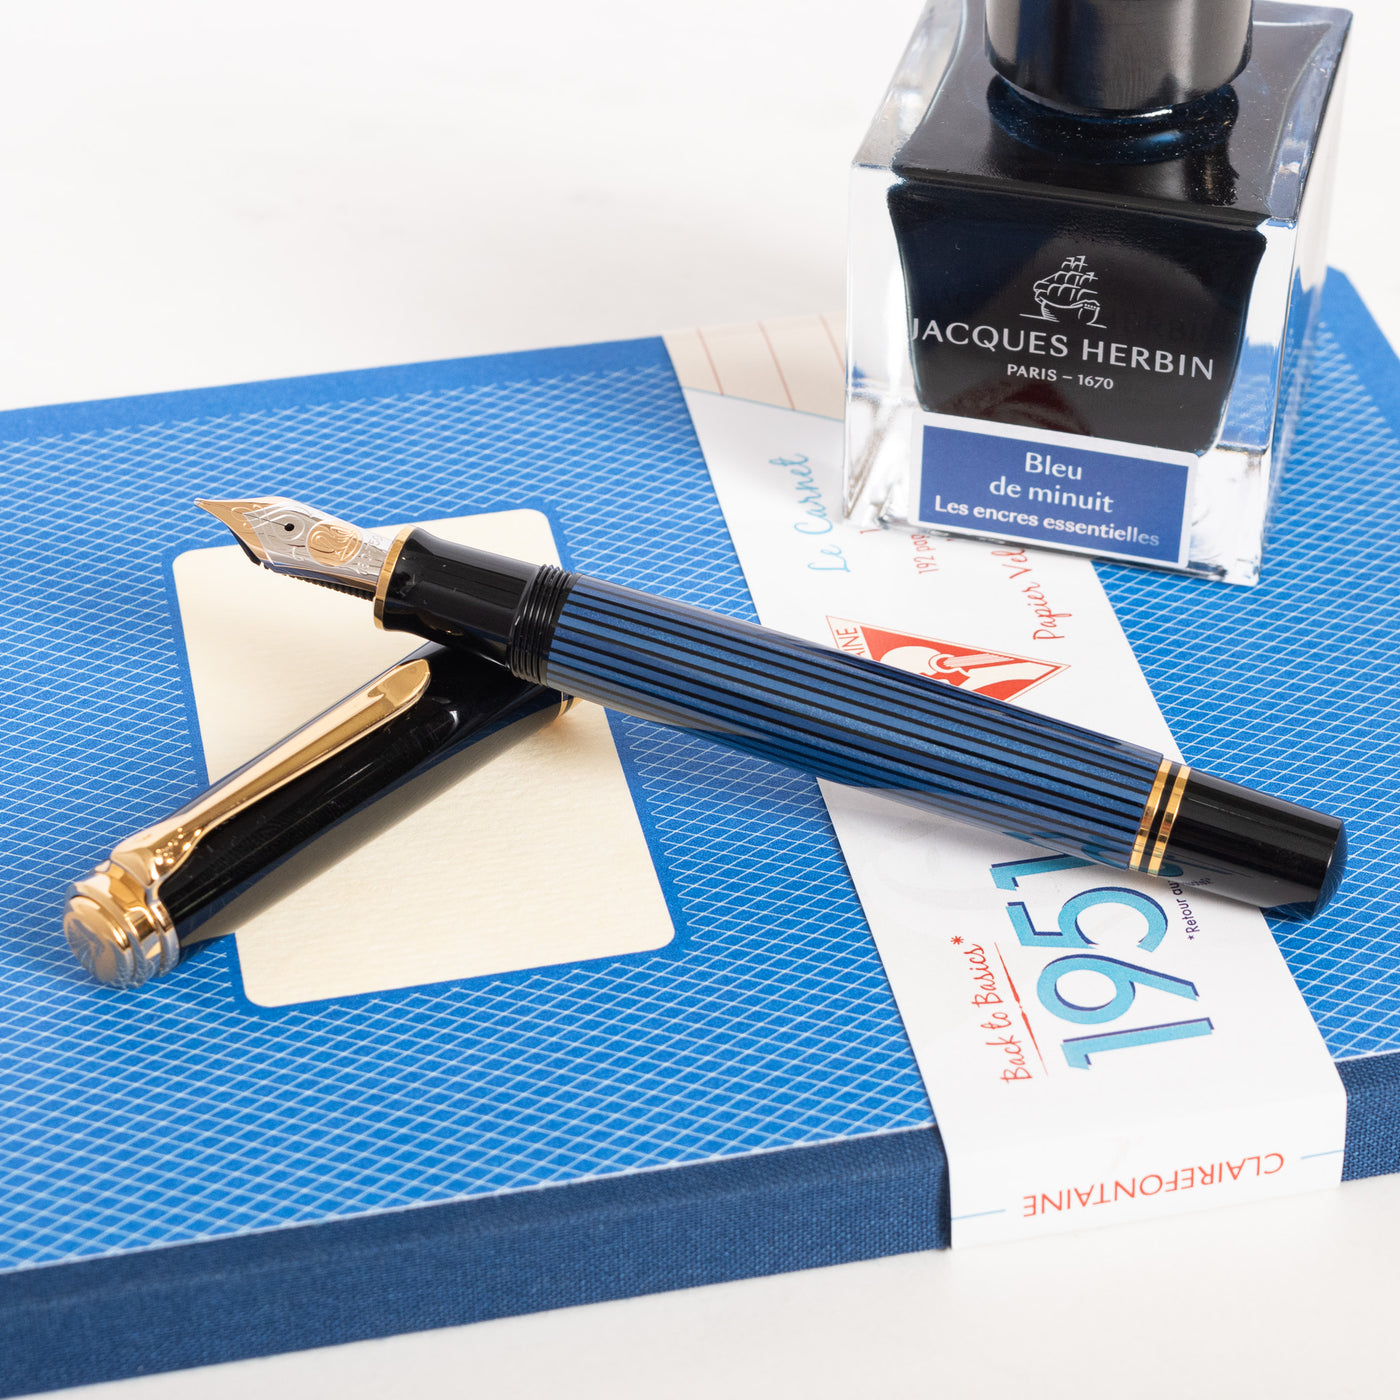 Pelikan Souveran M800 Black & Blue Fountain Pen new